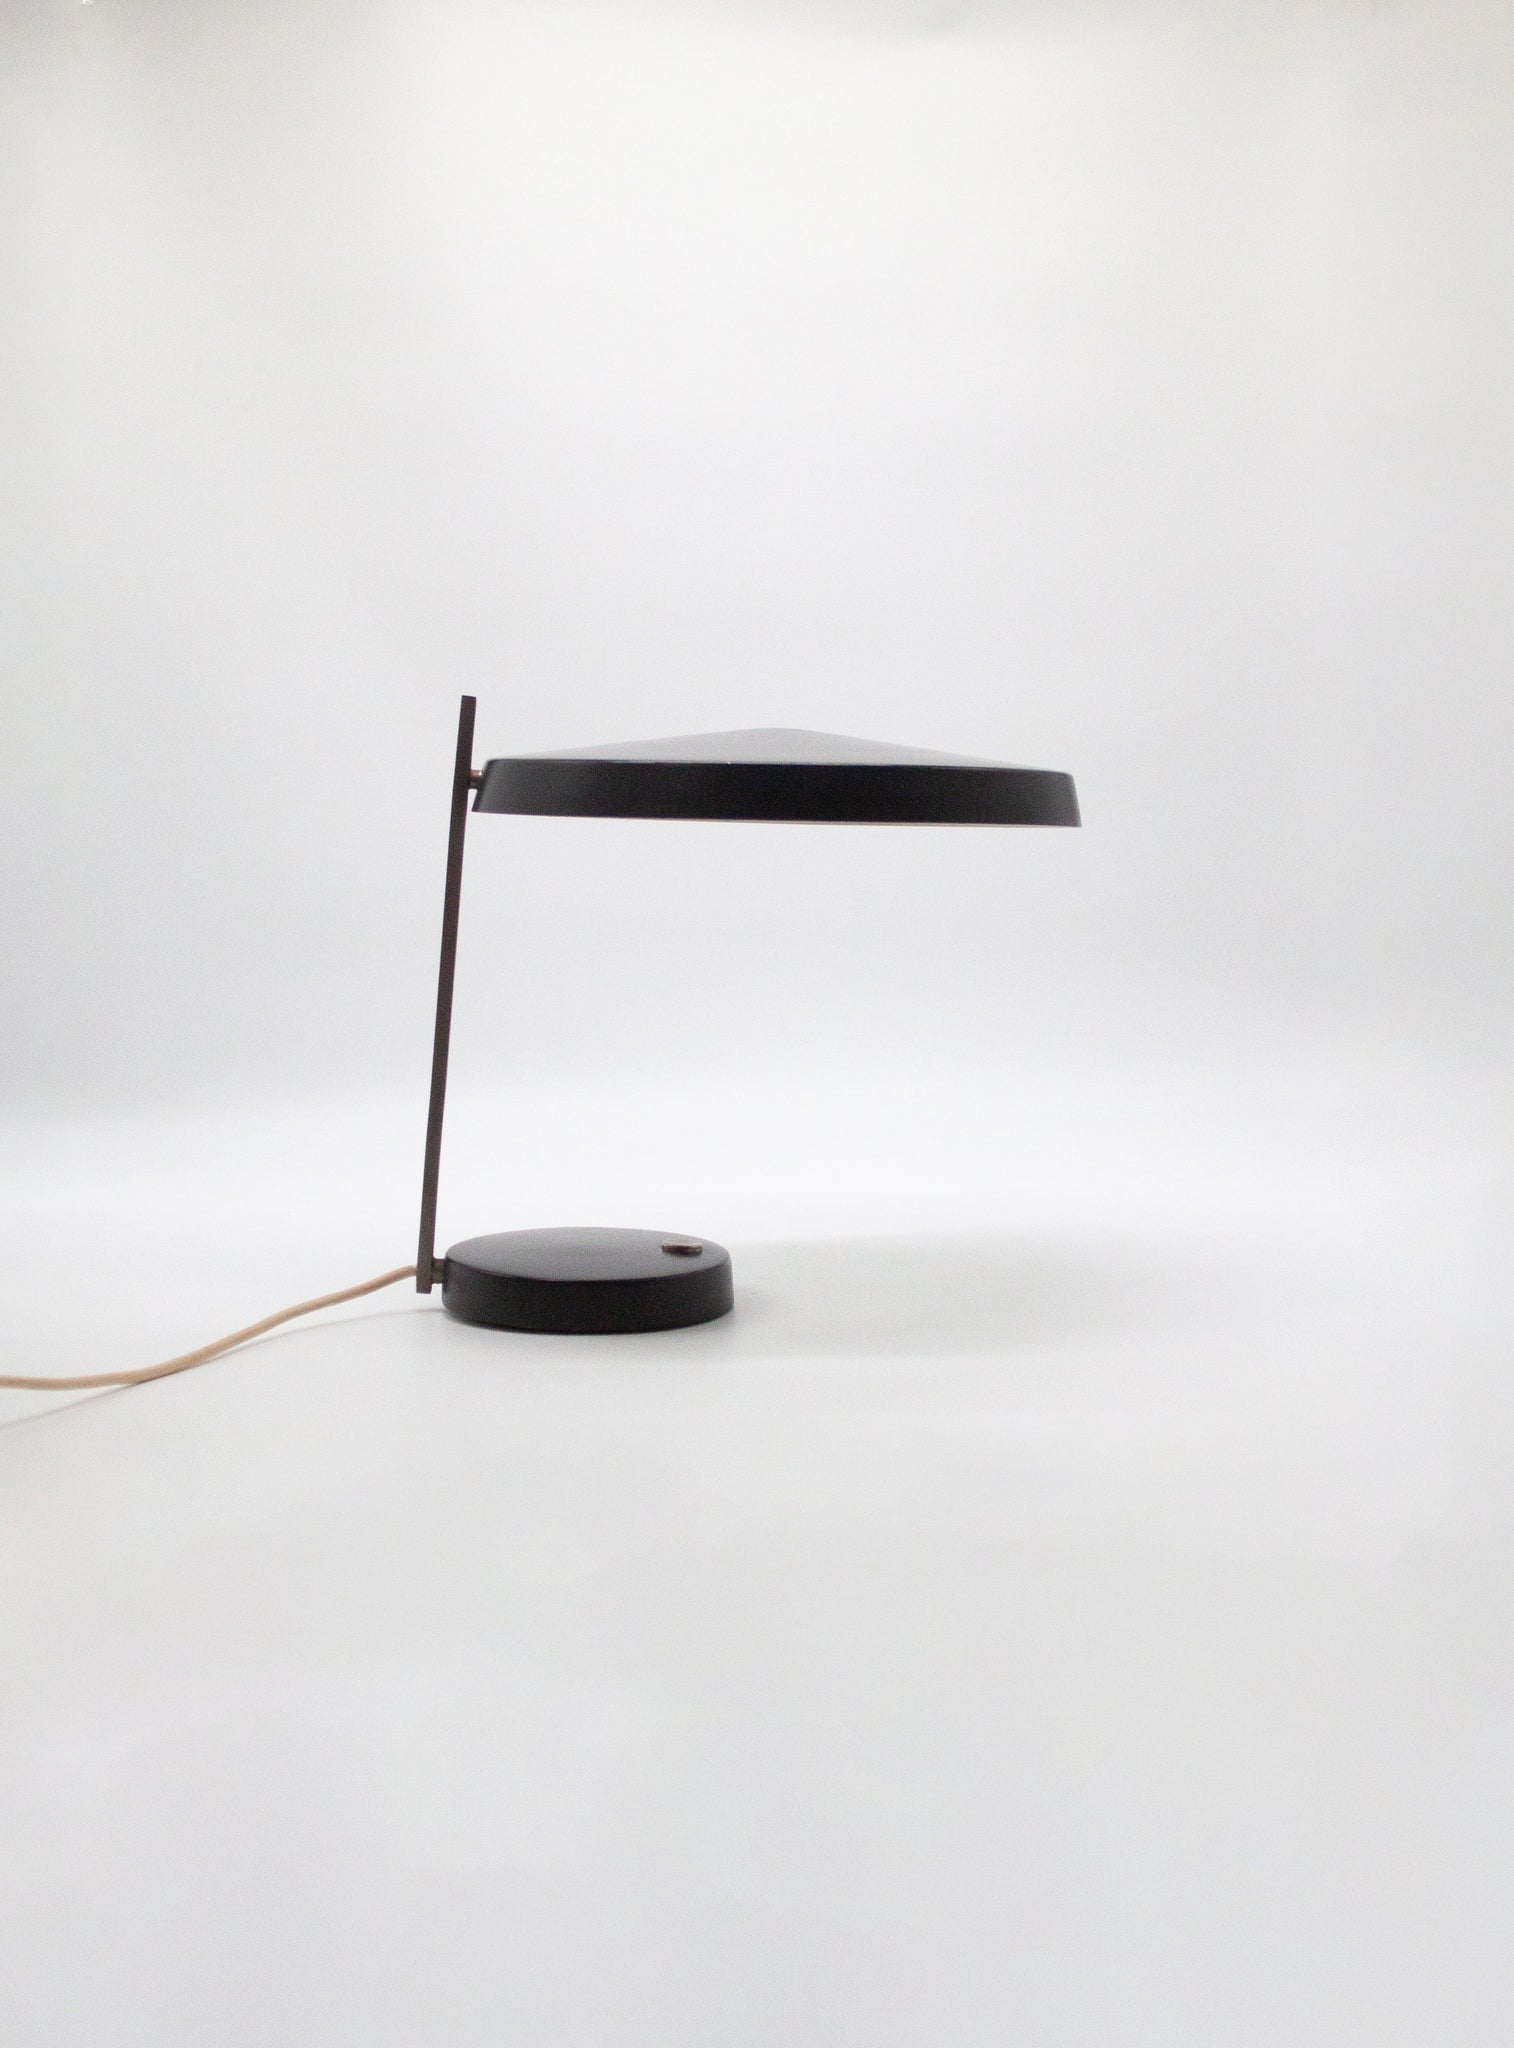 Hillebrand Oslo Table Lamp by Heinz Pfaender (Black)